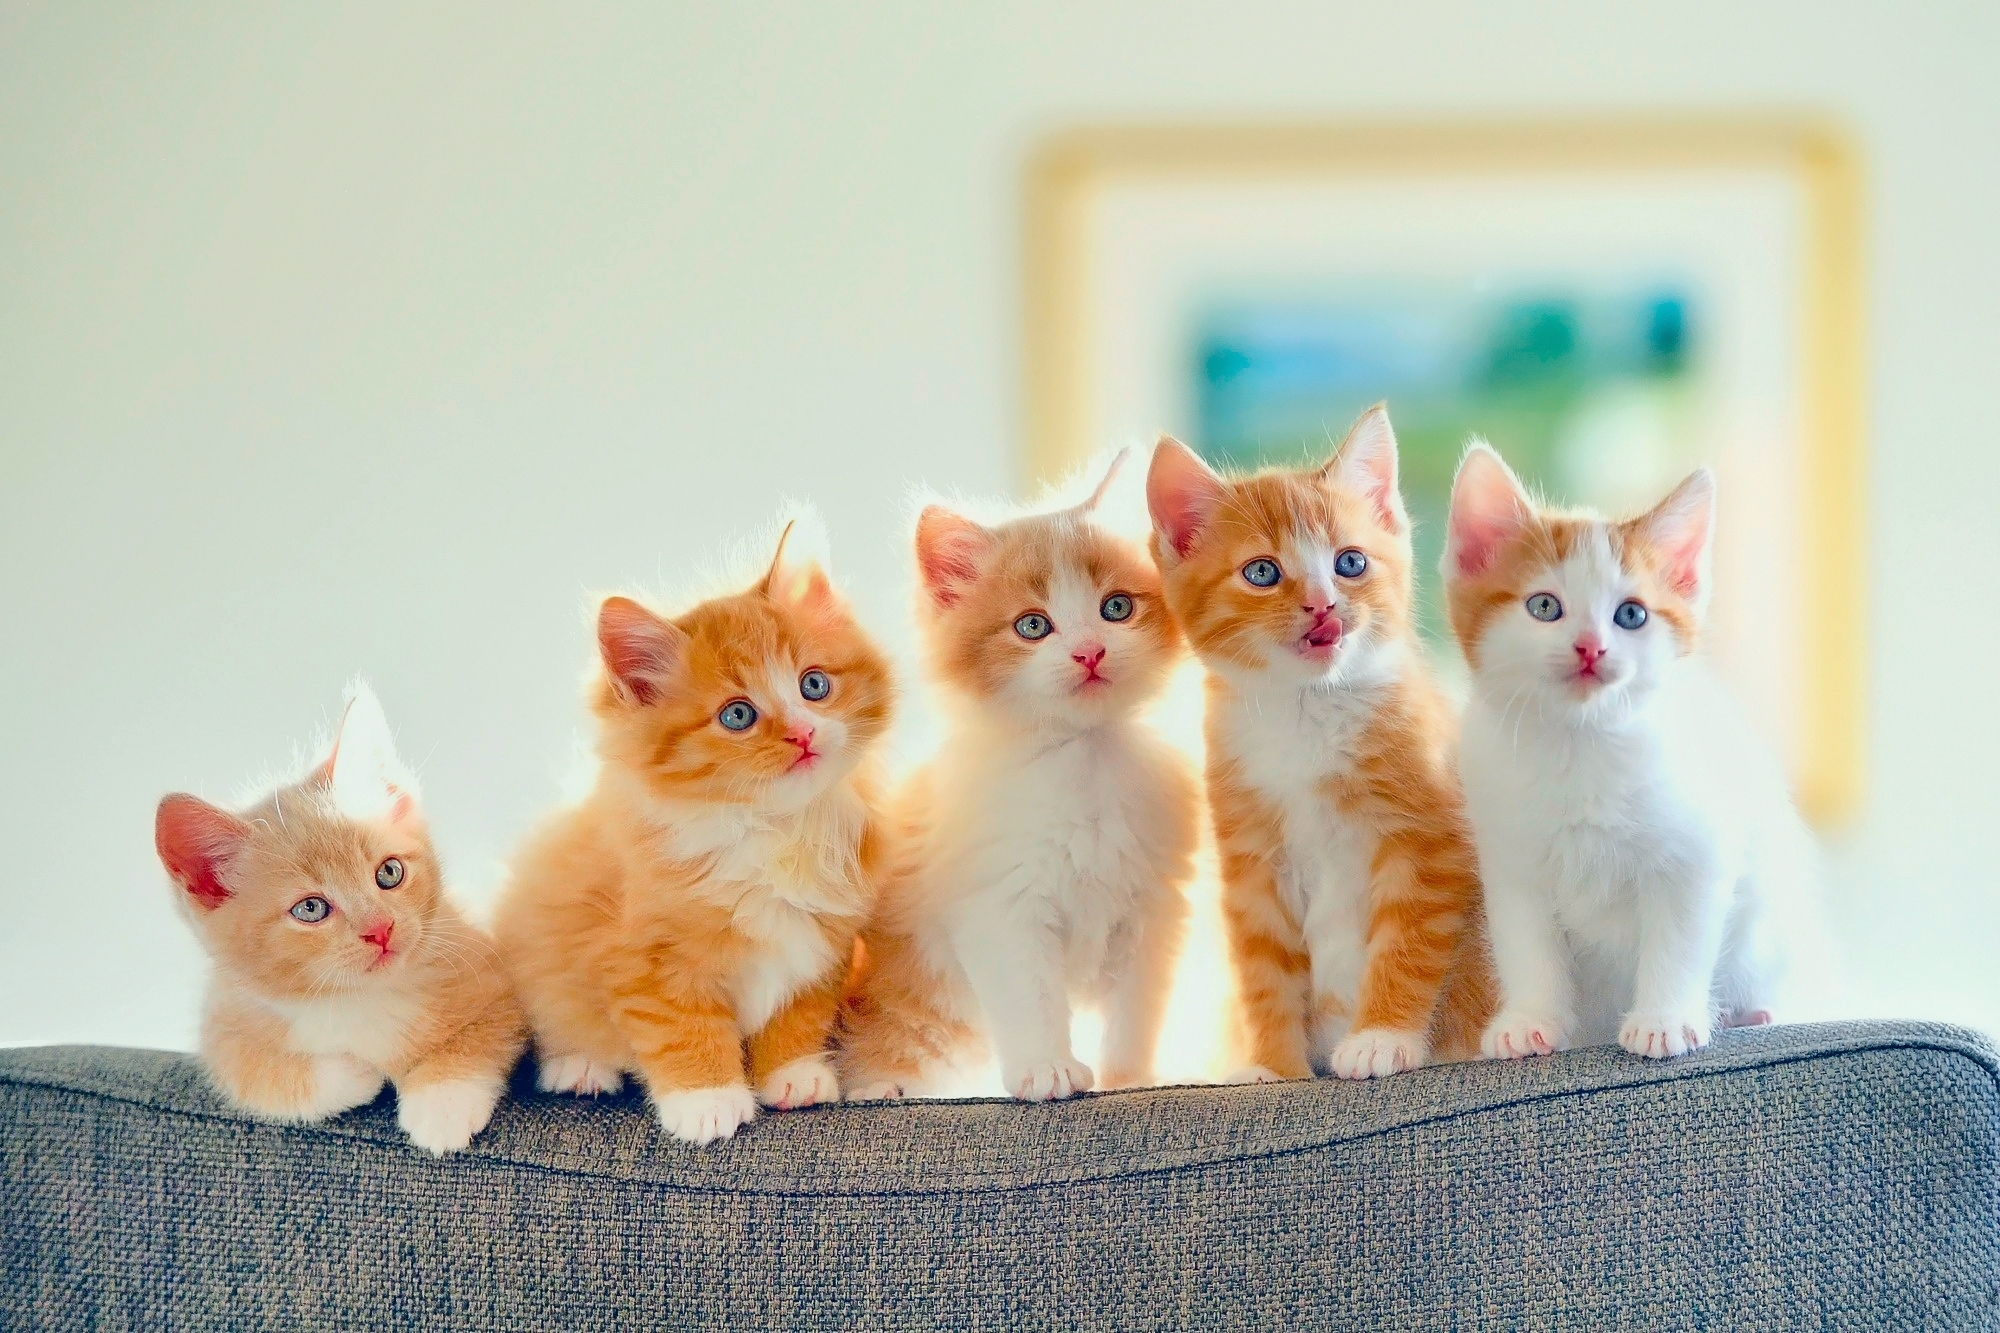 5 Cute Kittens Wallpaper - Kitten Baby Cute Cat - HD Wallpaper 